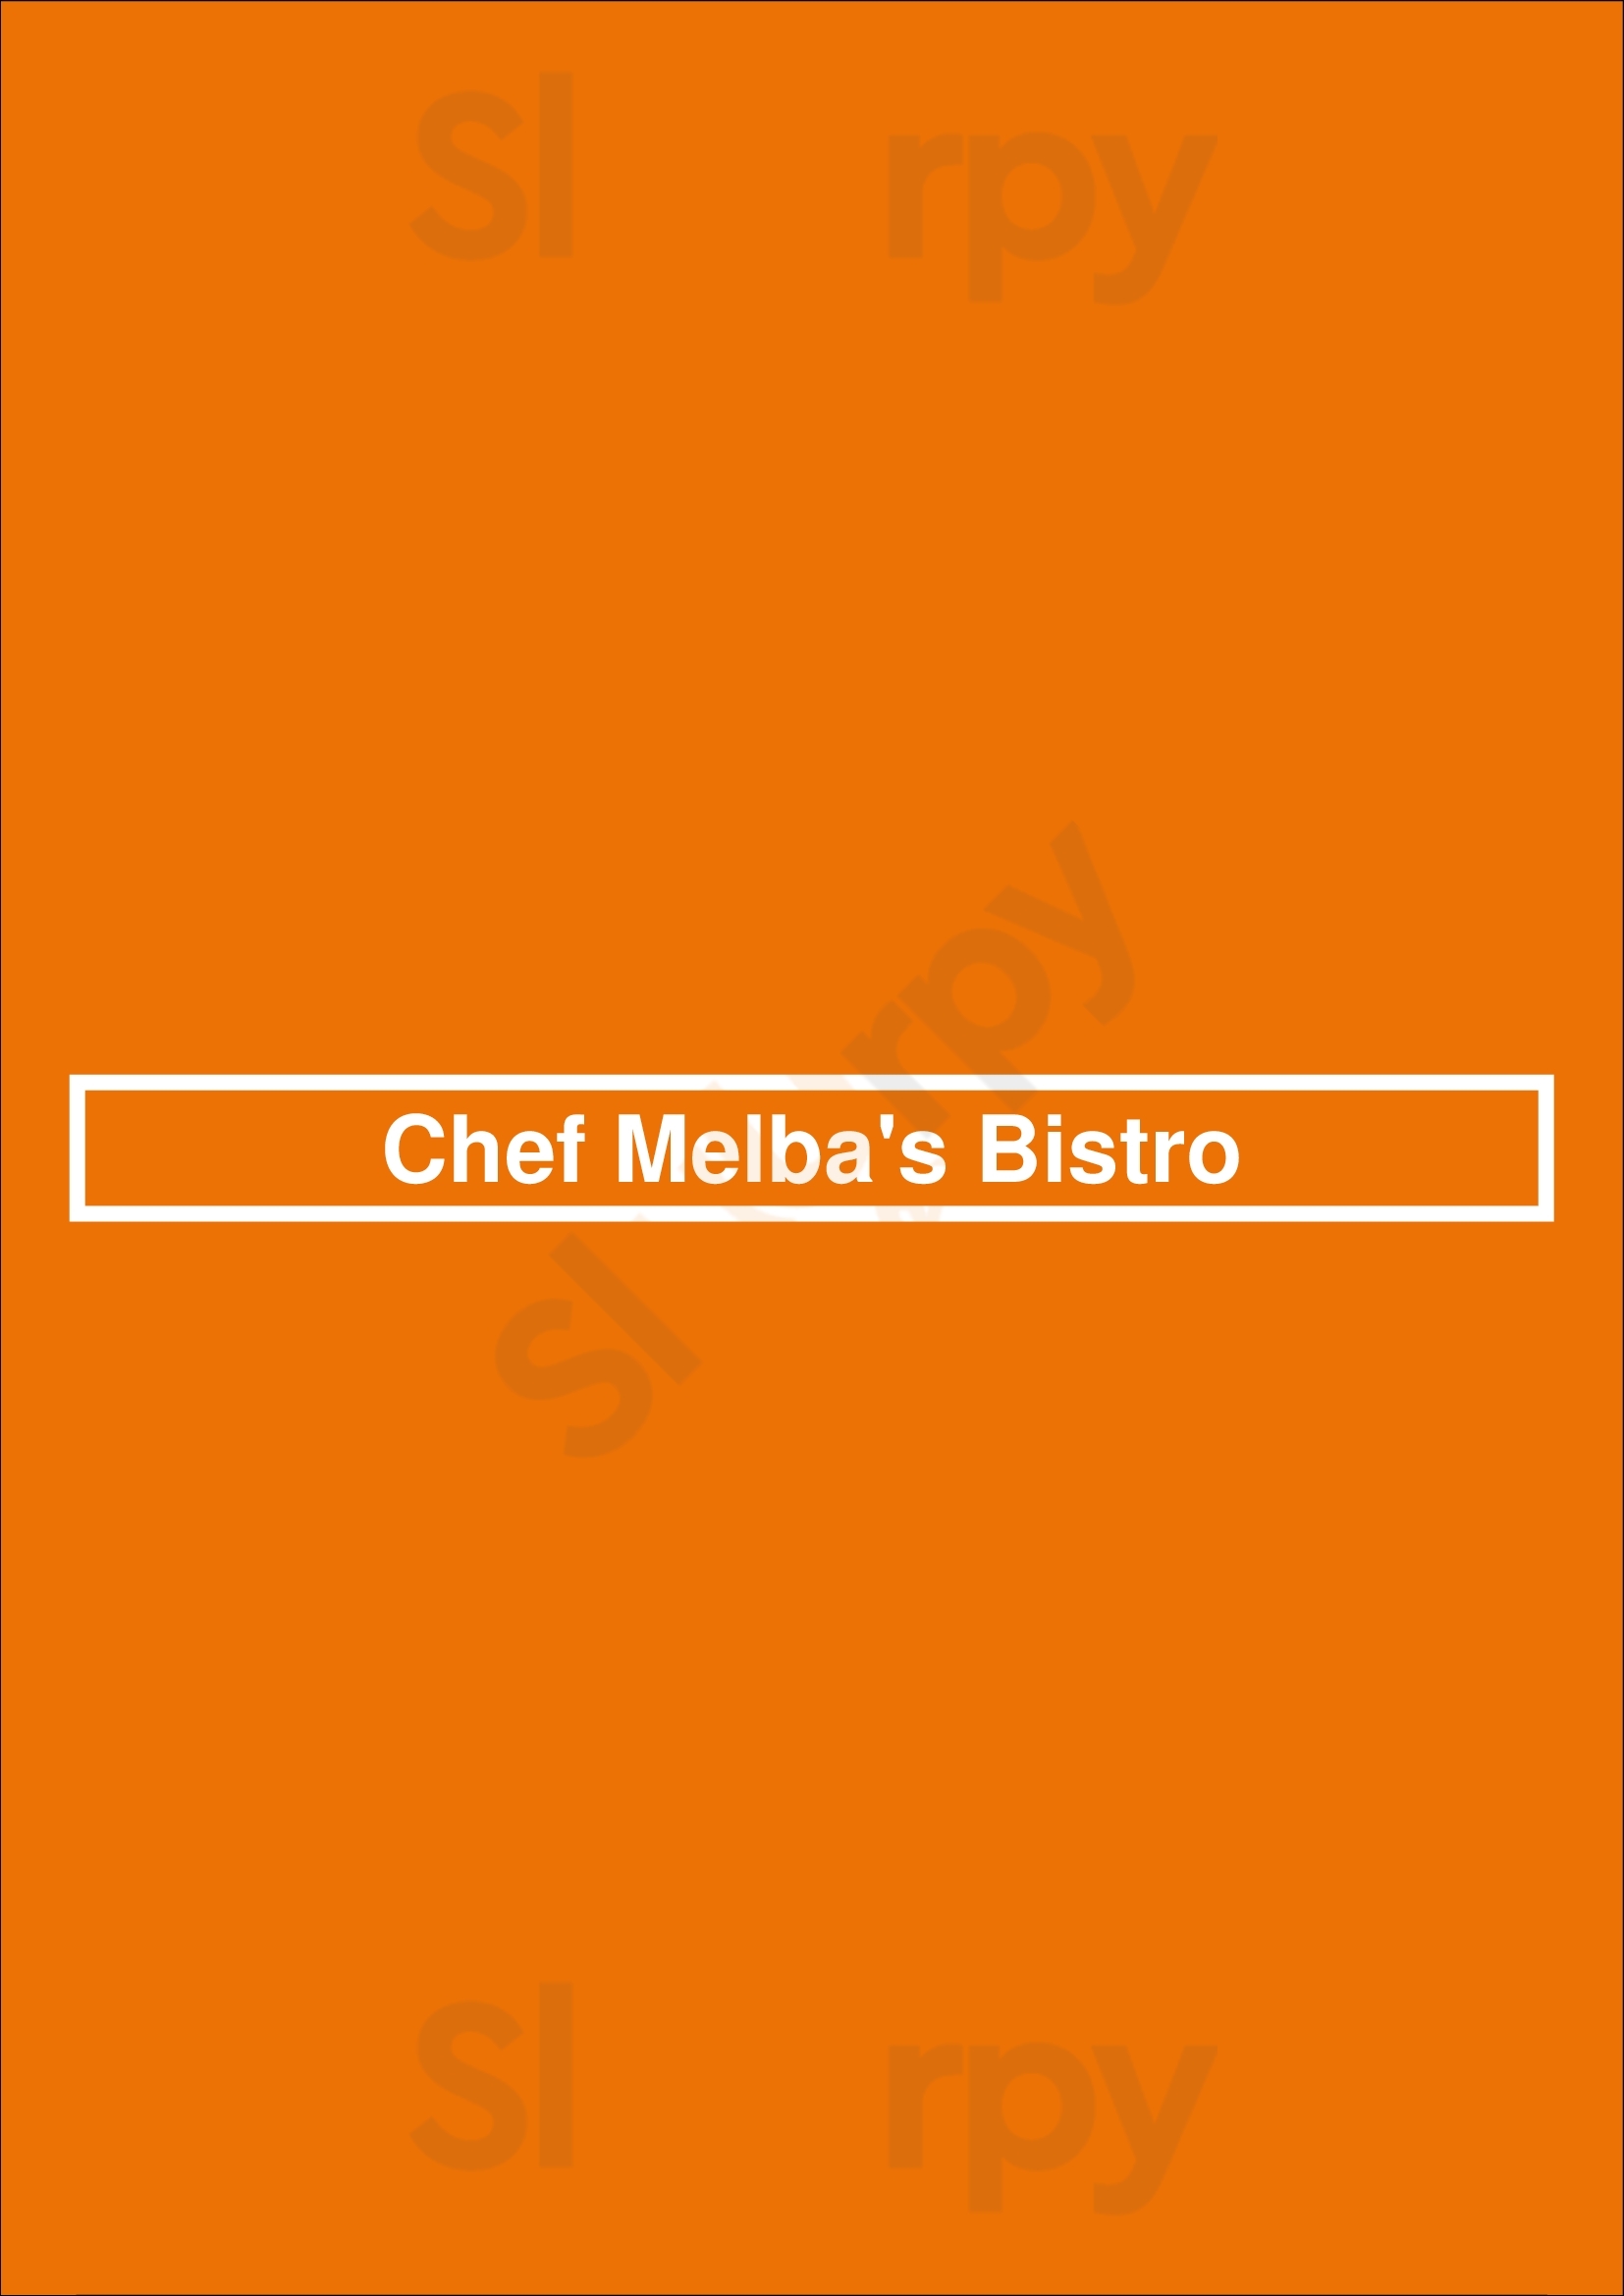 Chef Melba's Bistro Hermosa Beach Menu - 1